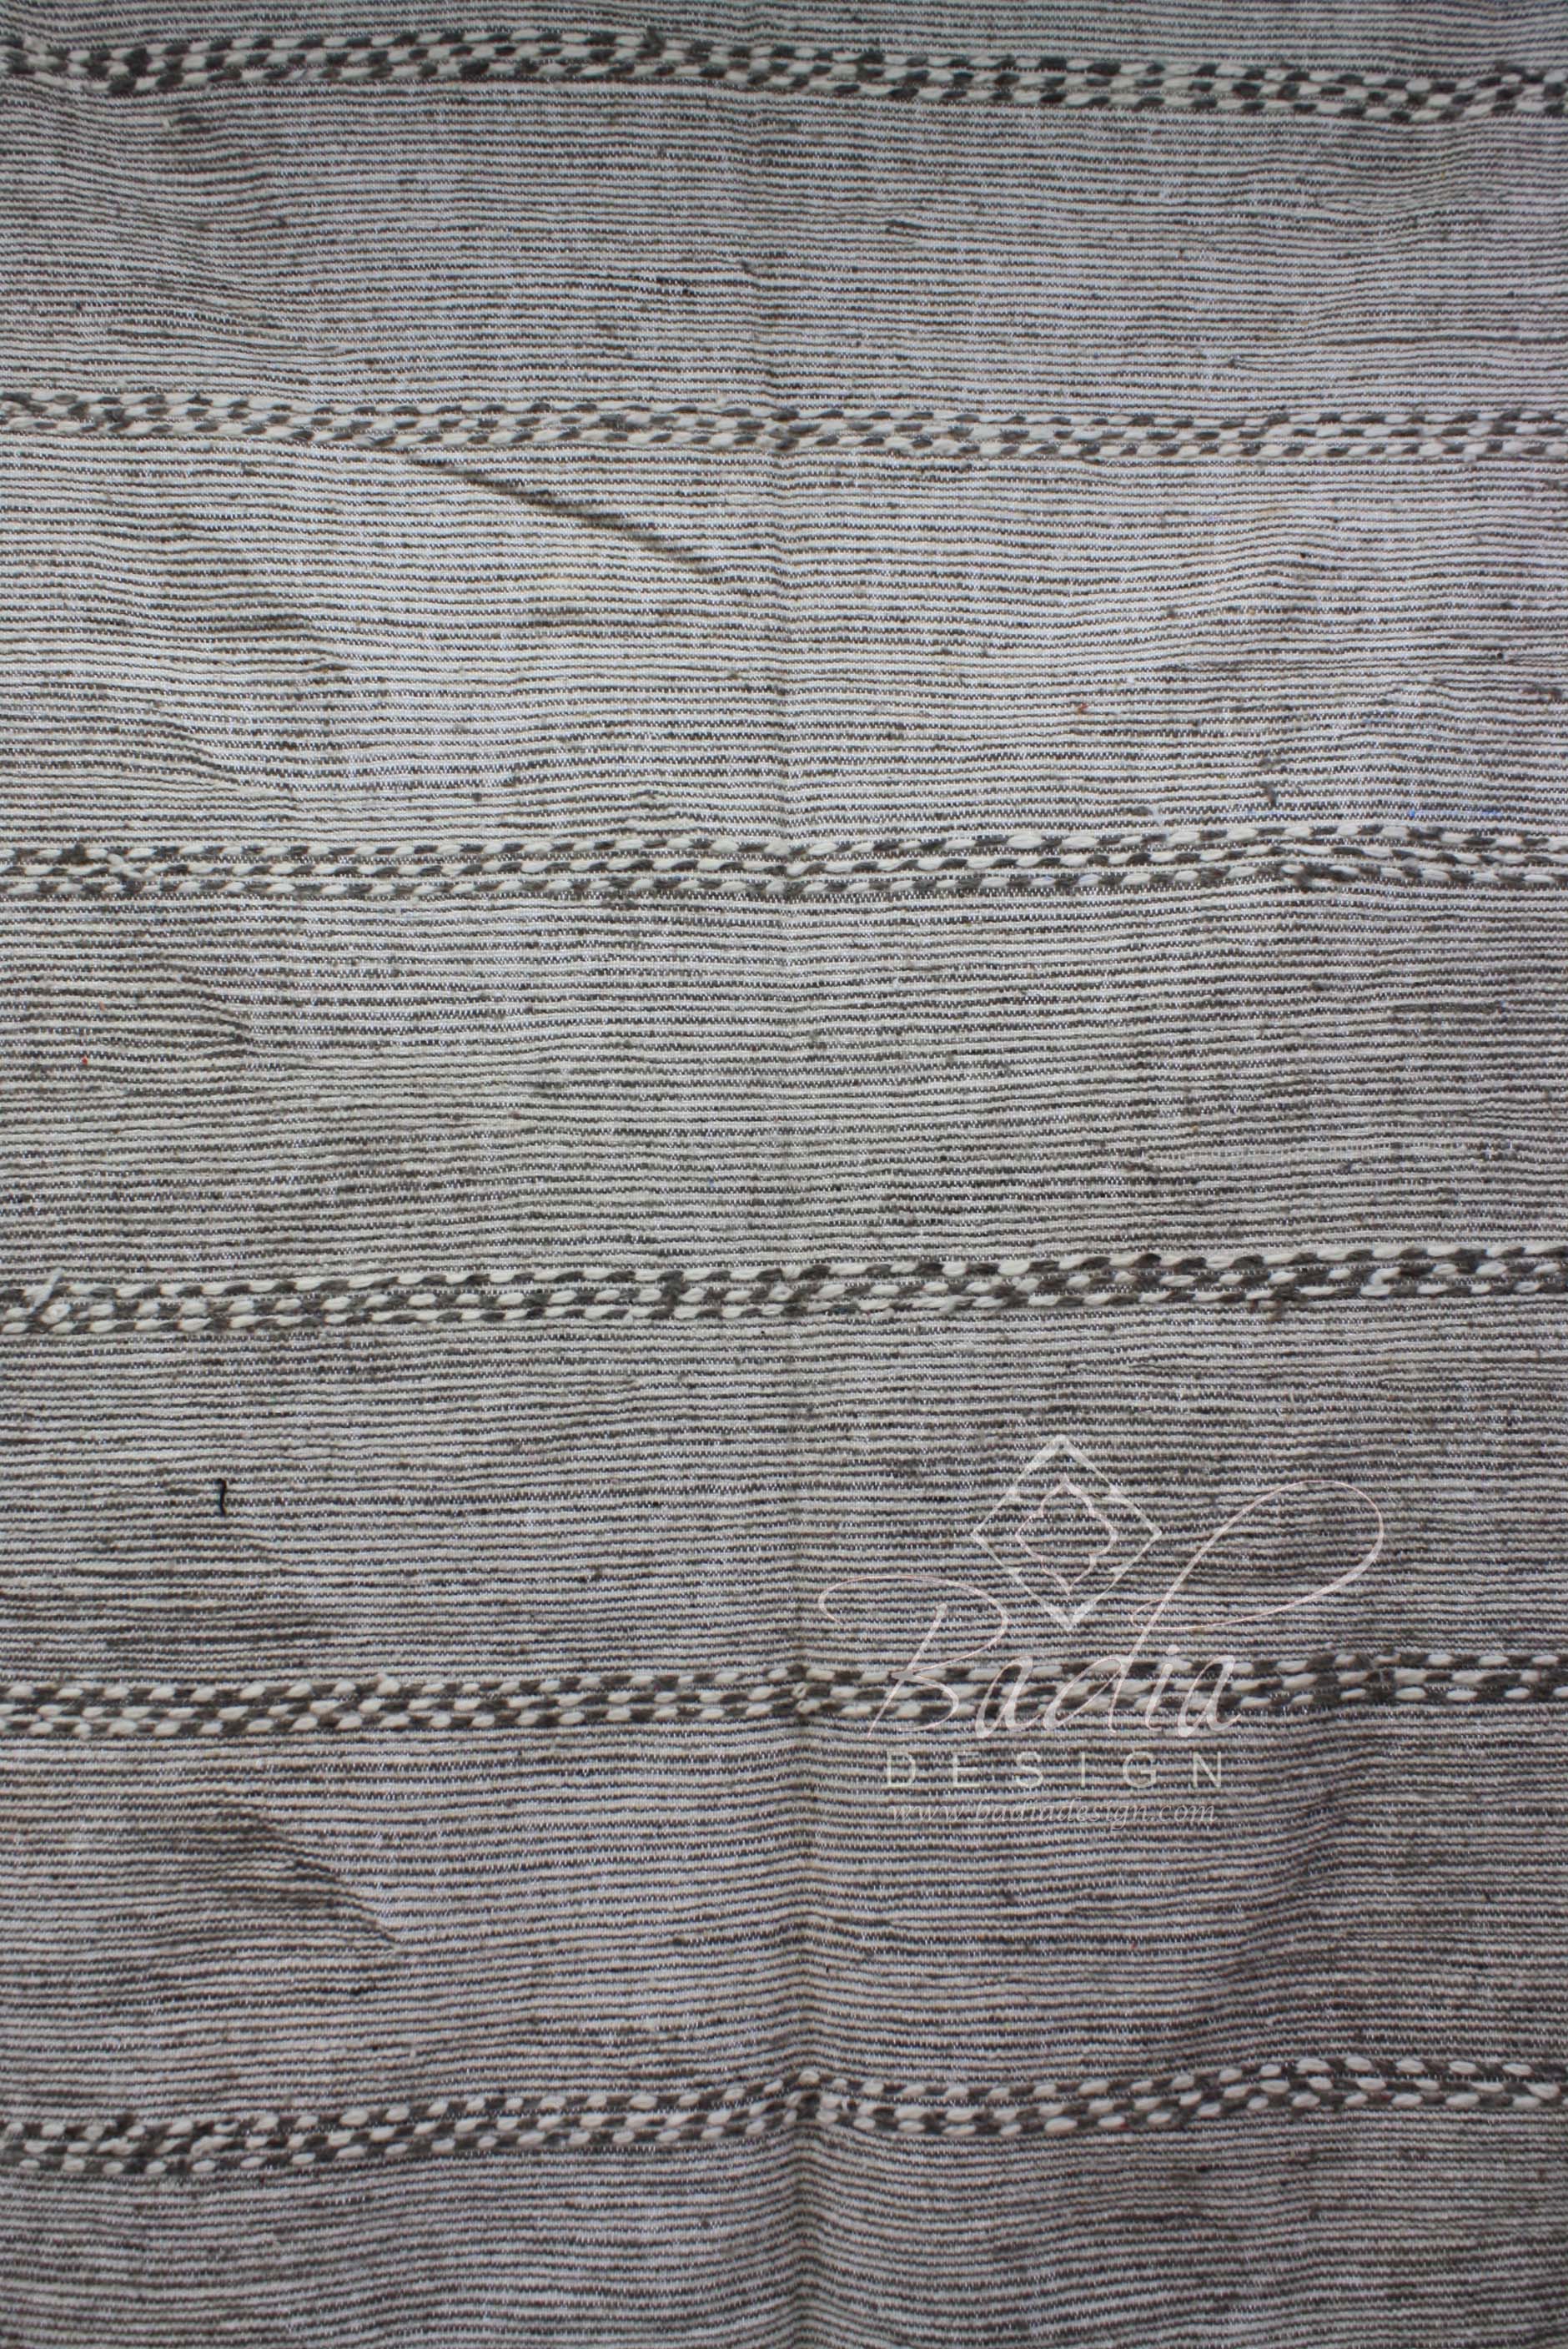 moroccan-hand-woven-berber-rug-r877-2.jpg